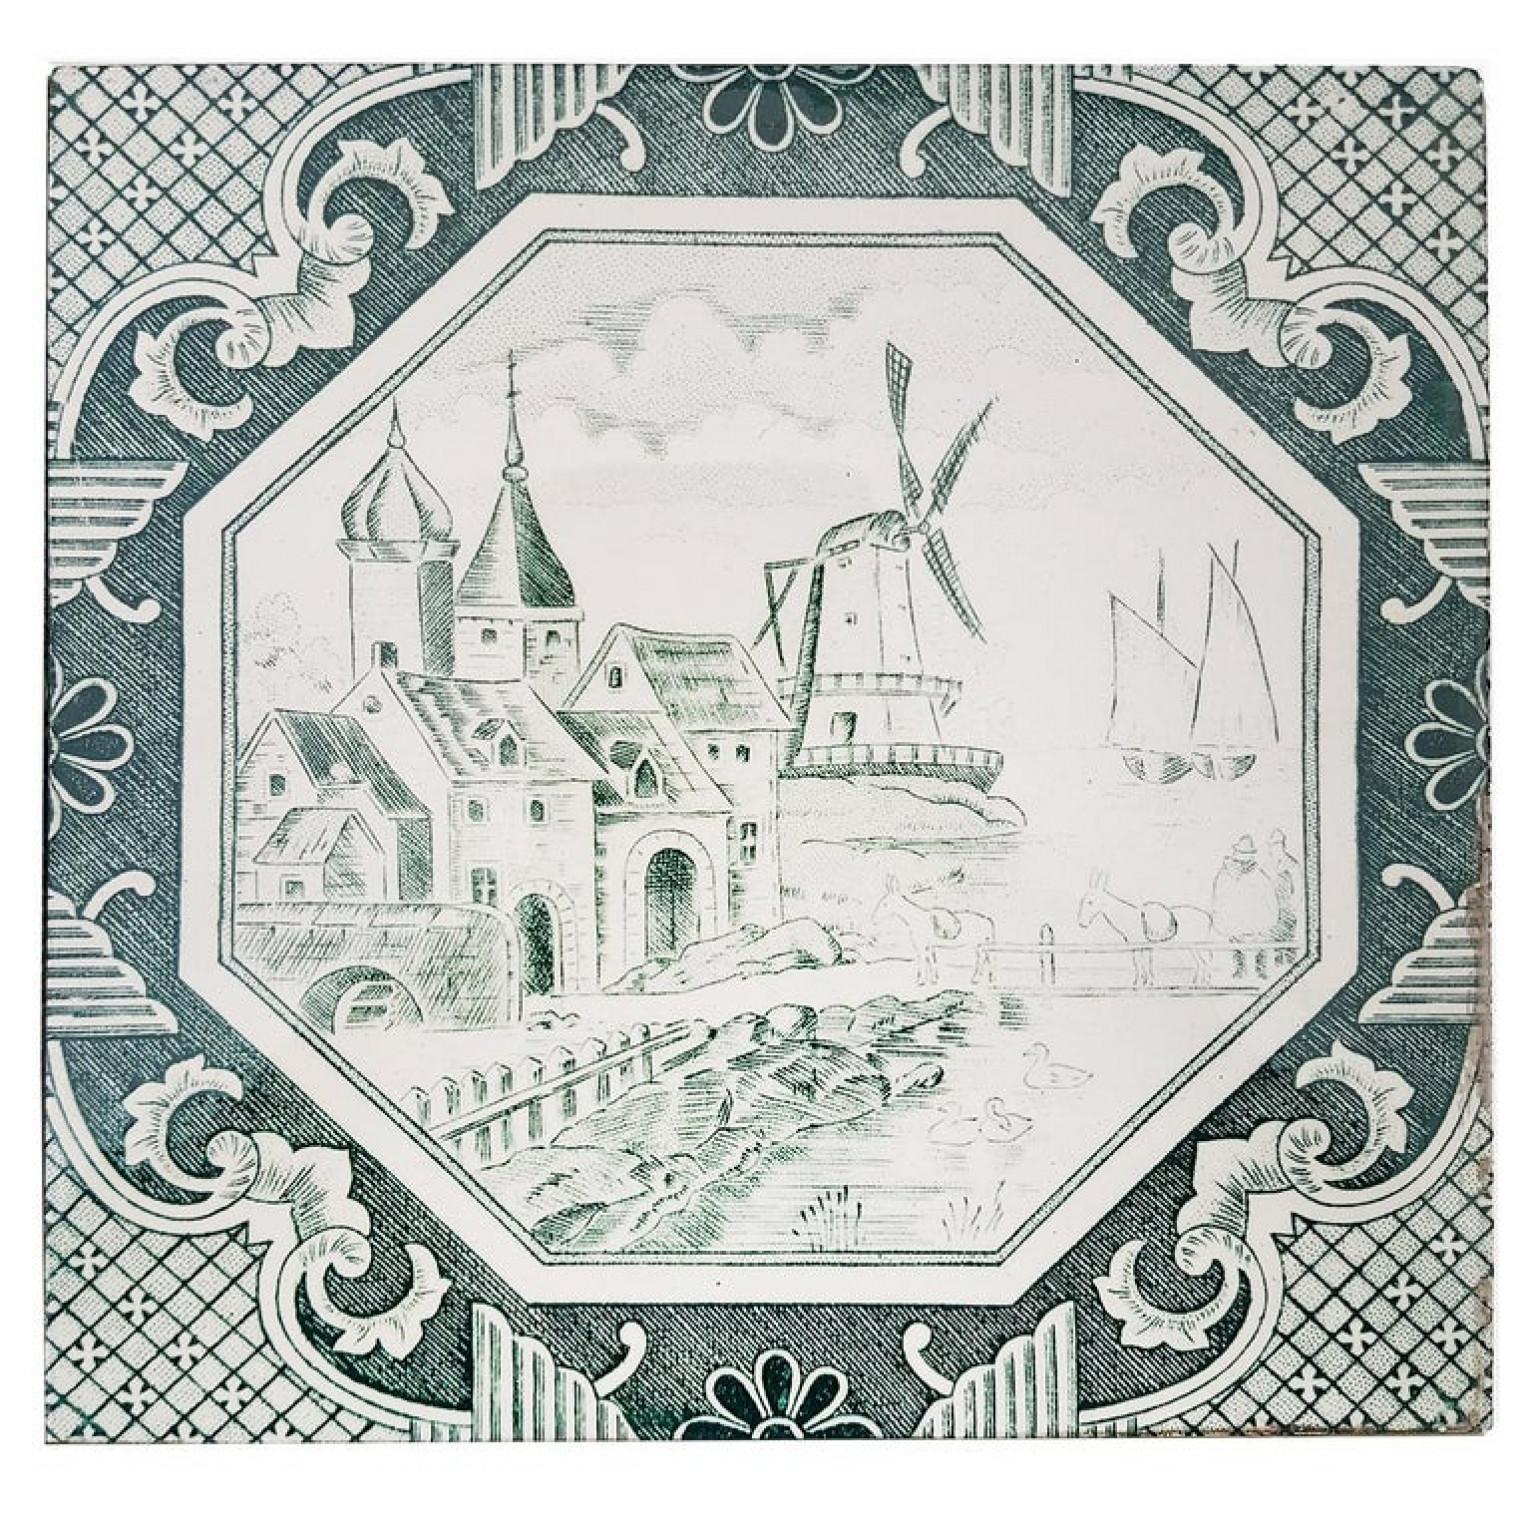 Glazed Set of 4 of Ceramic Tiles by Gilliot 'Total 200 Tiles', 1930 For Sale